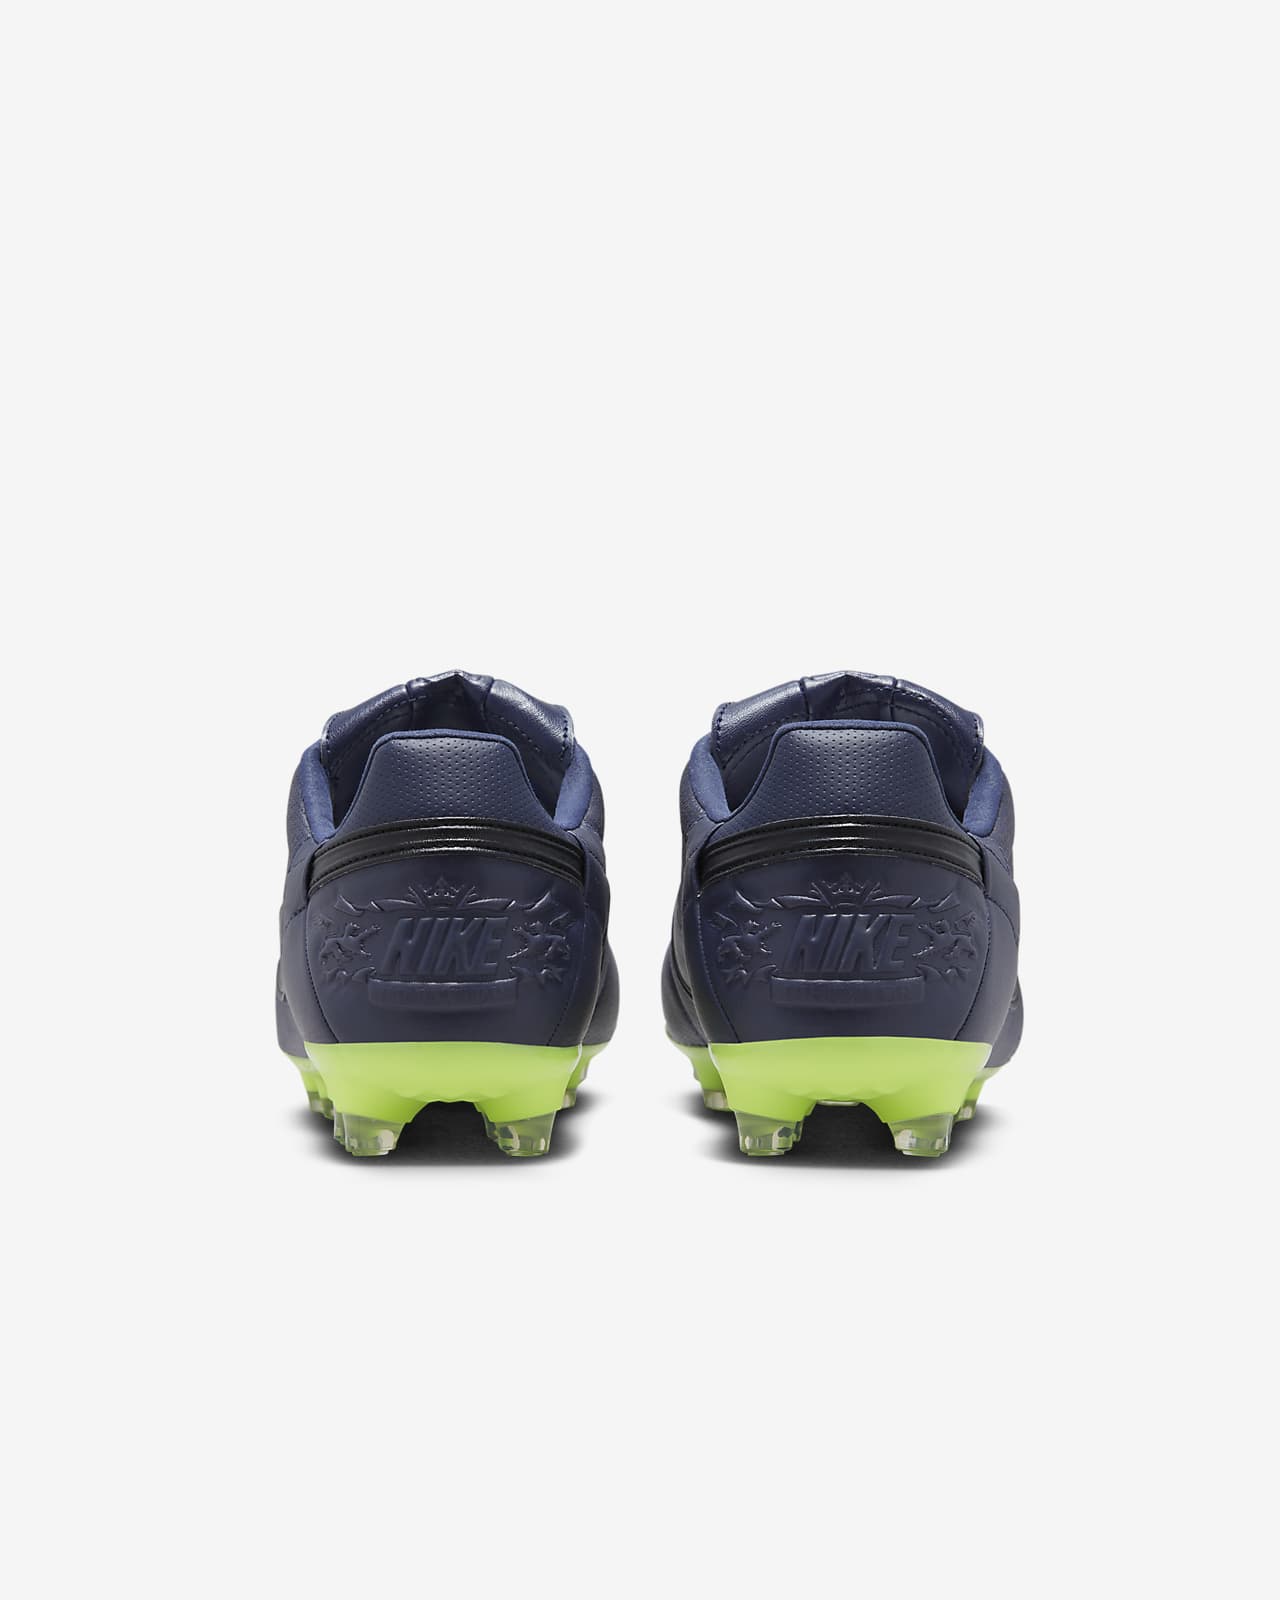 Oxidar crear Perseguir NikePremier 3 Firm-Ground Football Boot. Nike FI